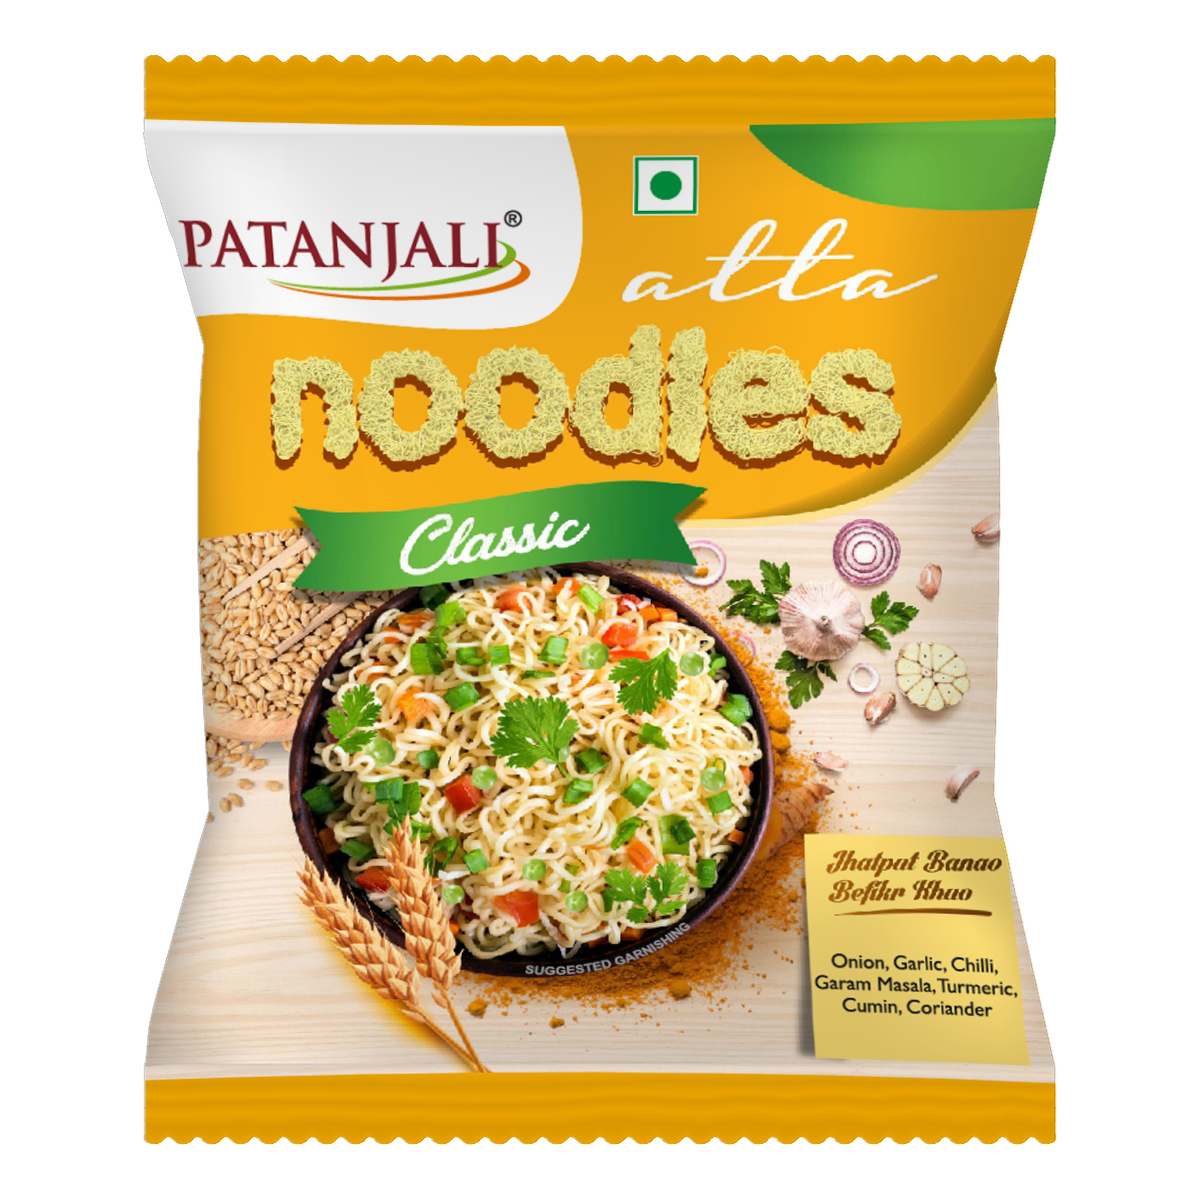 Patanjali Atta Noodles Classic